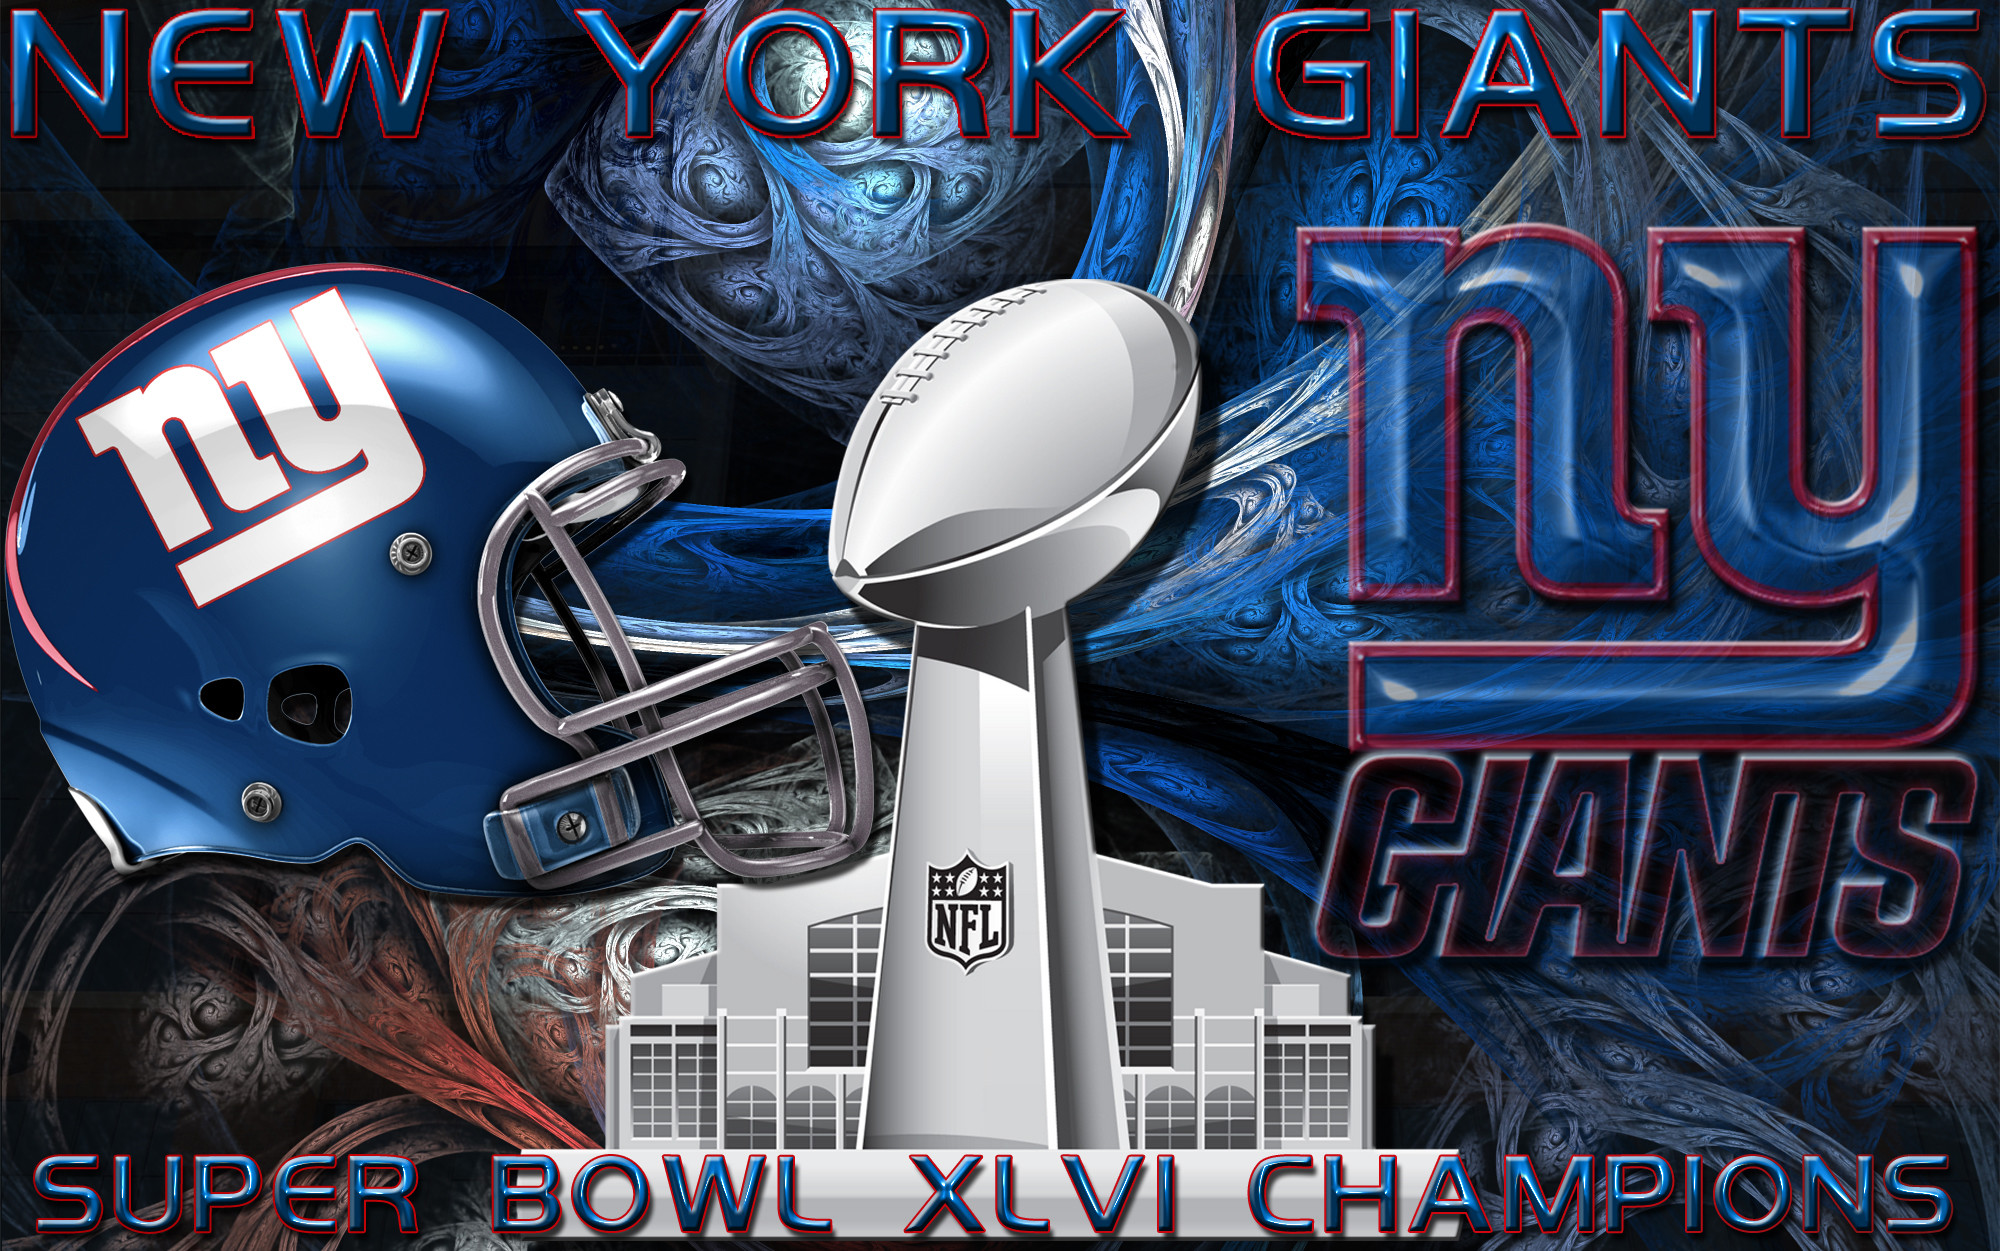 2000x1251 New York Giants Super Bowl XLVI Champions Wallpaper Alternate Version  